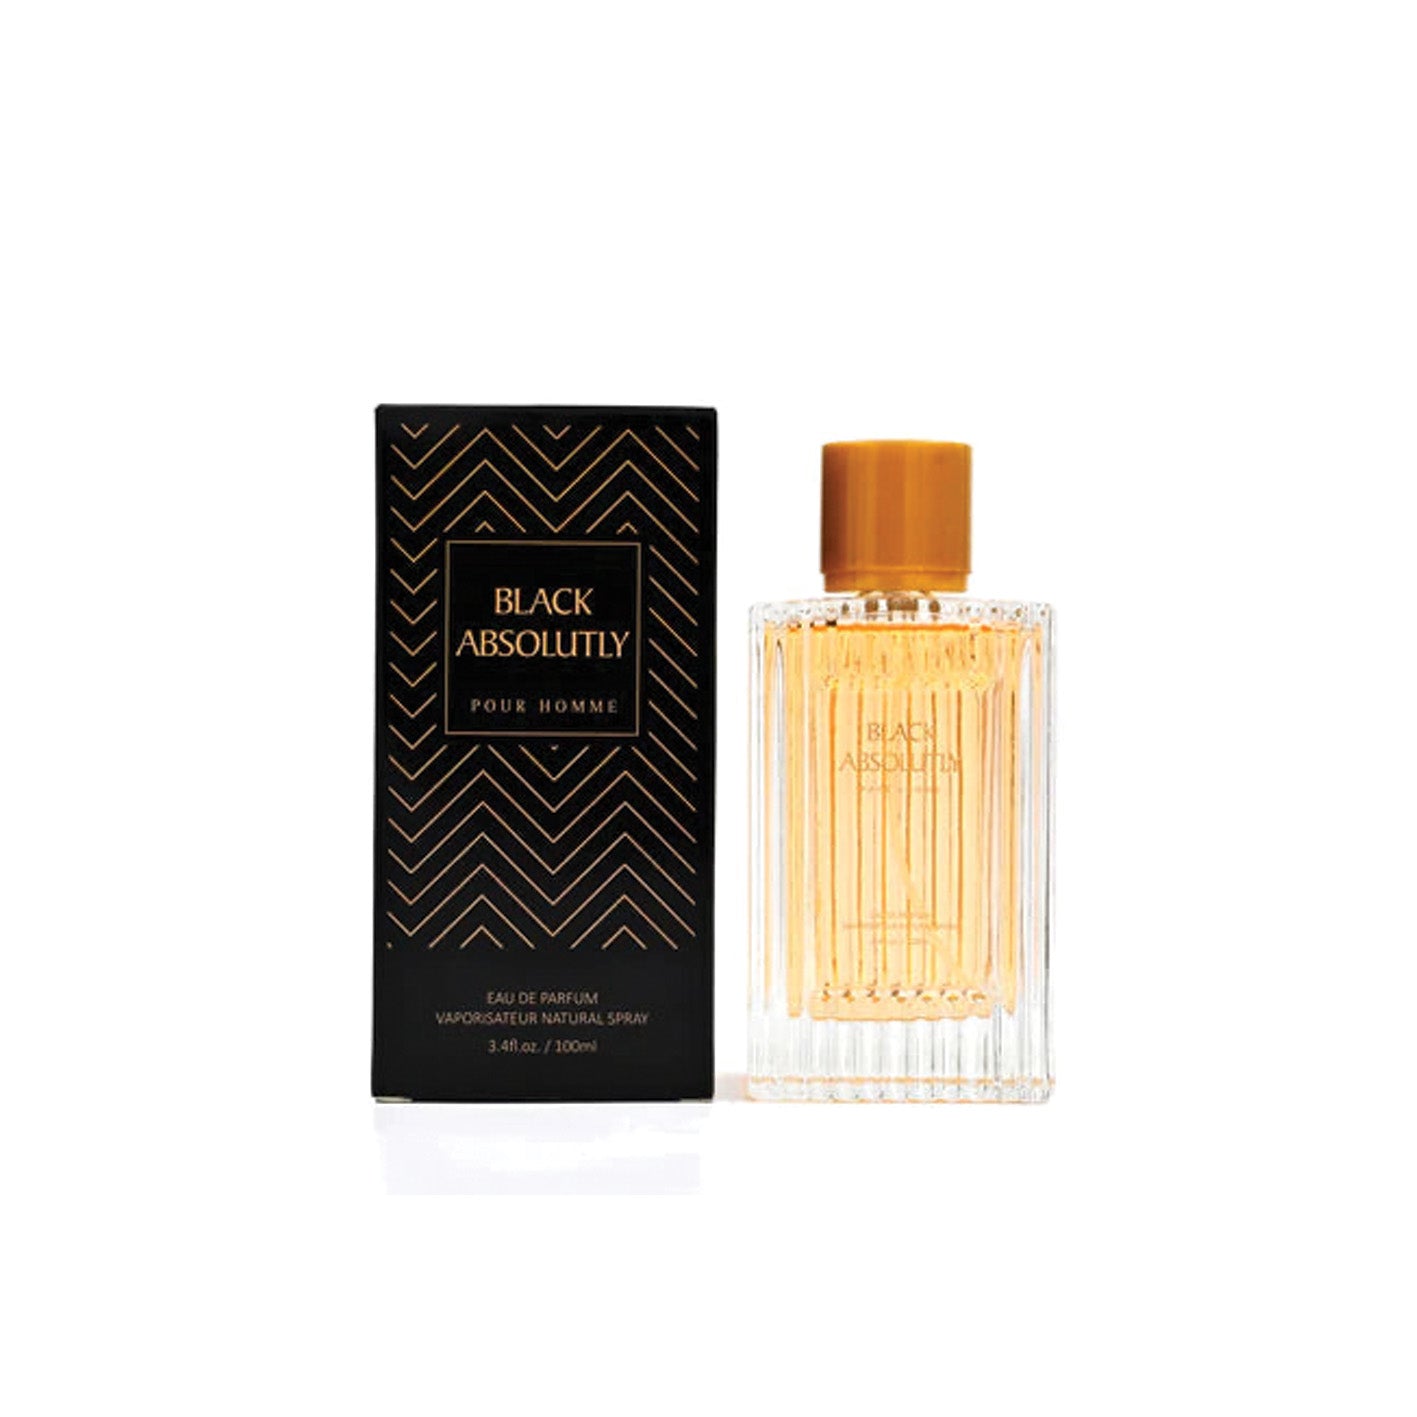 Perfume (Black Absolutly) 100ml 6391-1